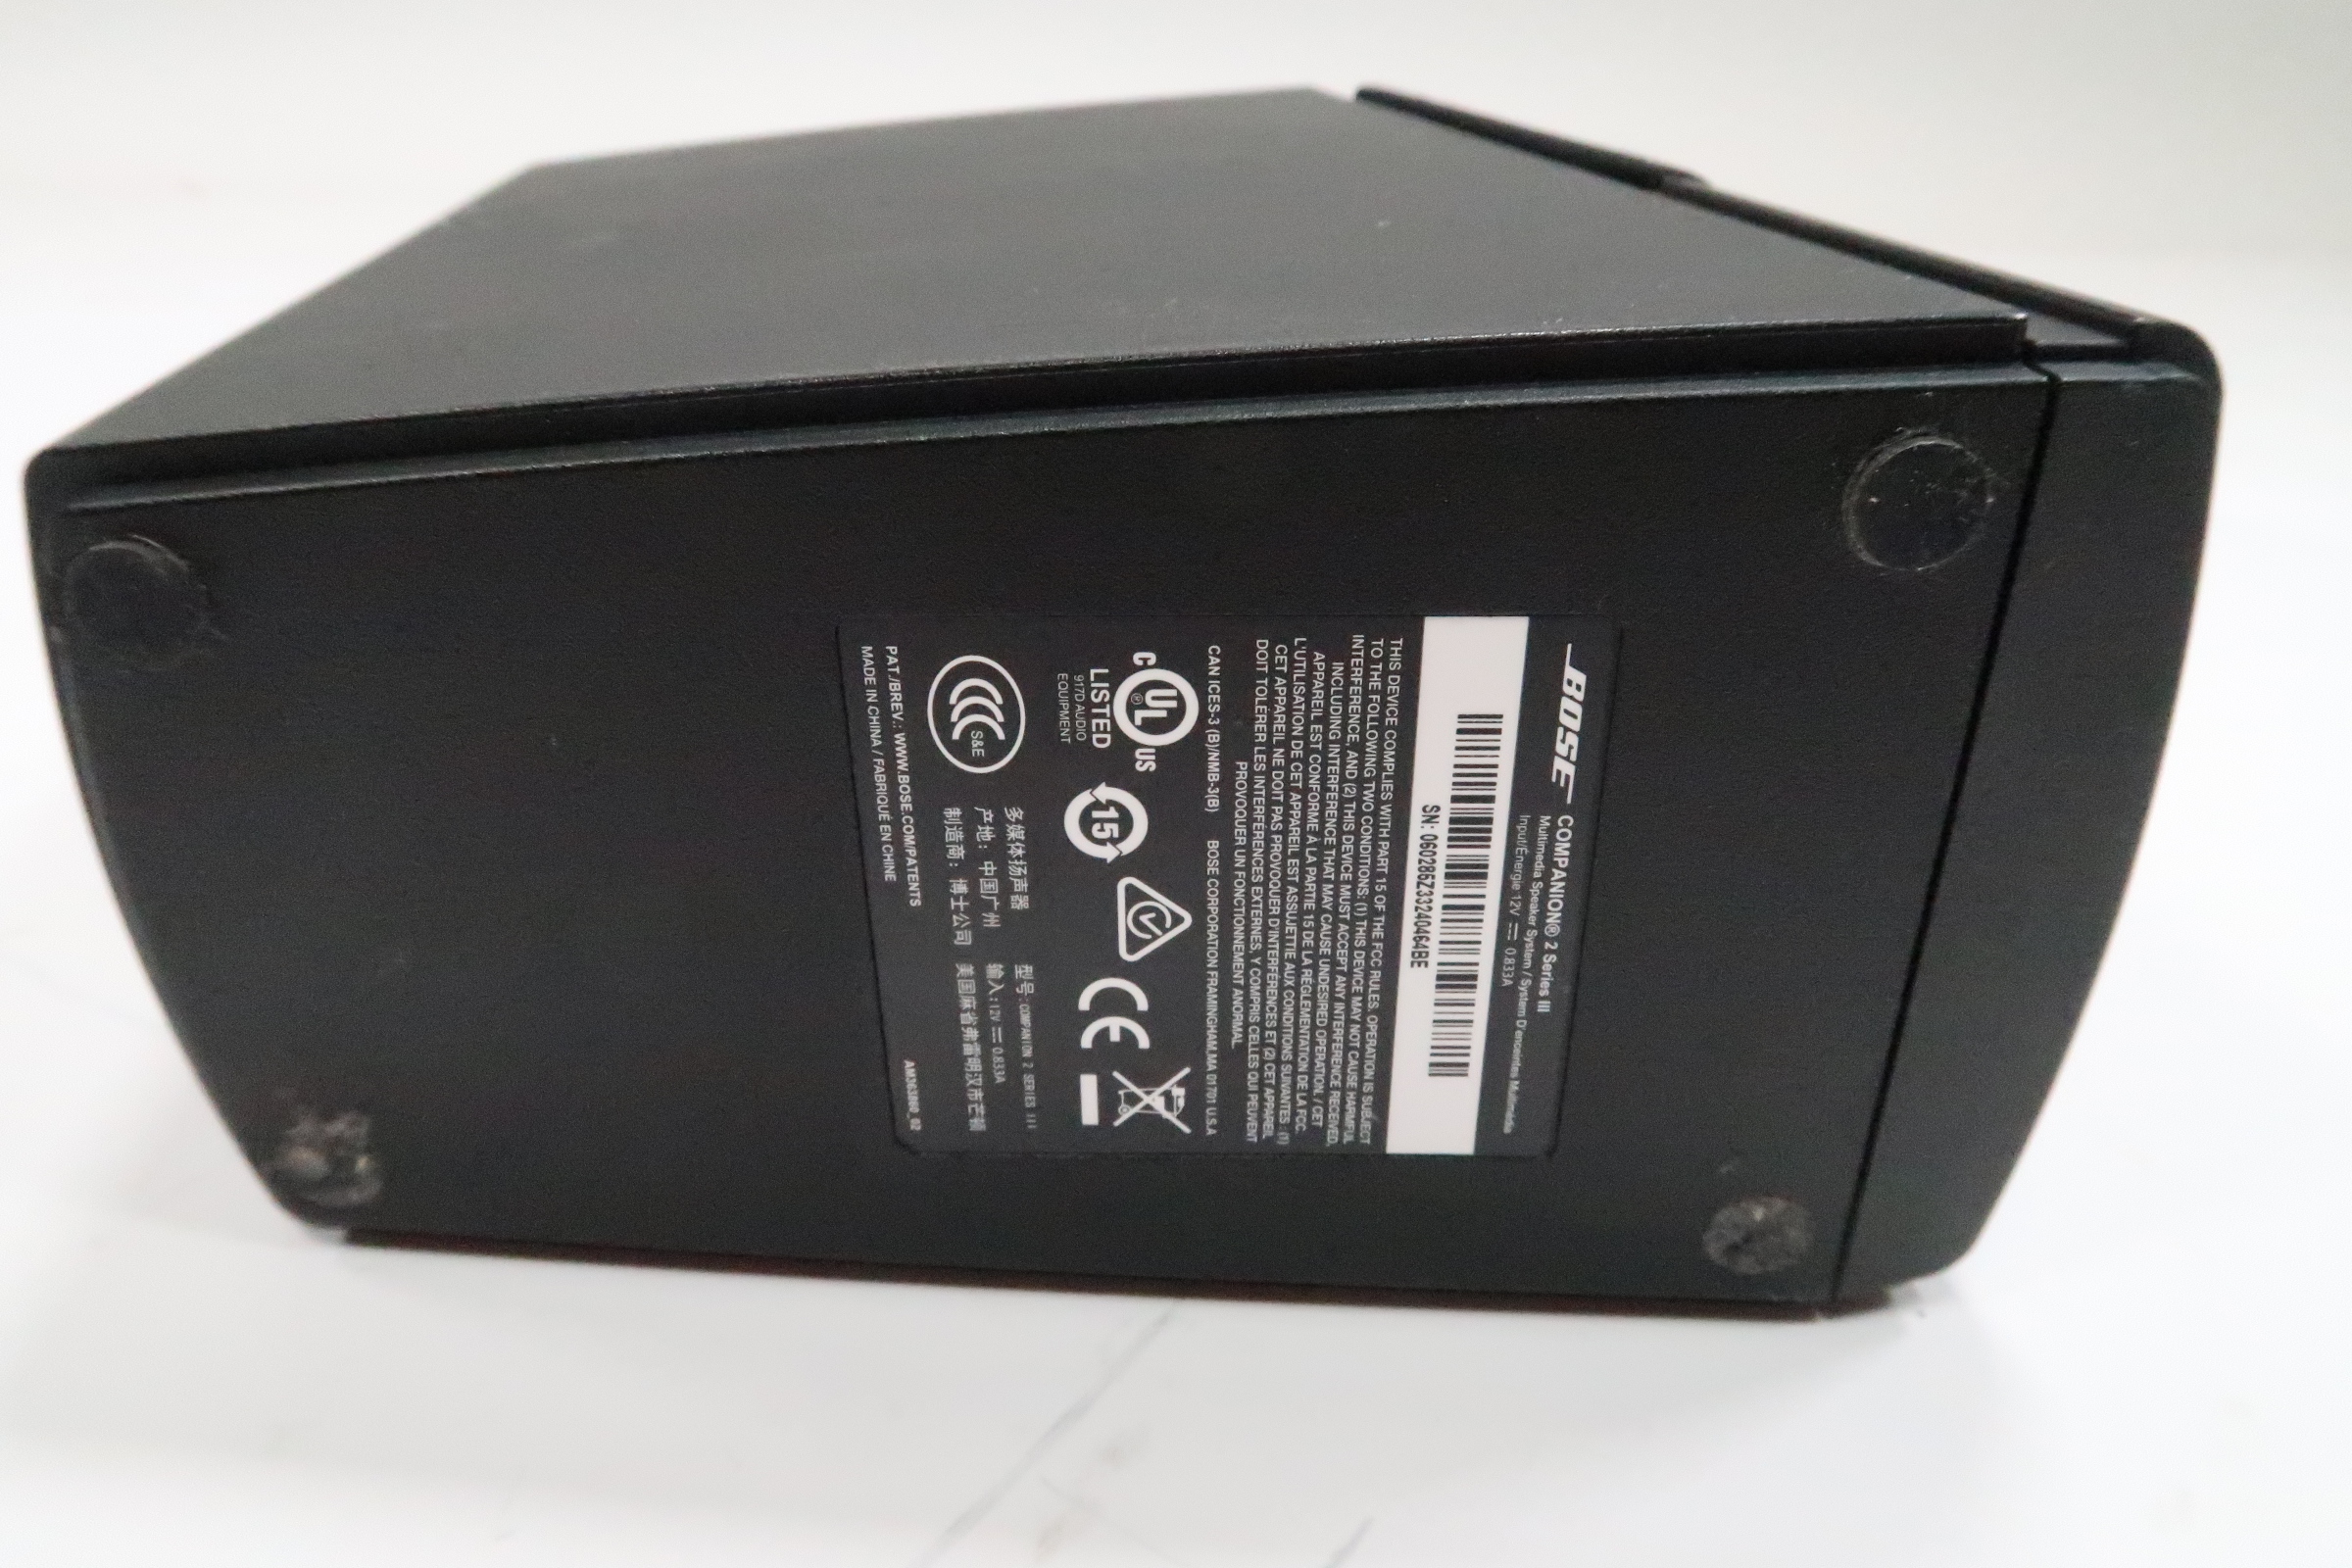 Bose Companion 2 Series III Multimedia Speaker System - Black 9972